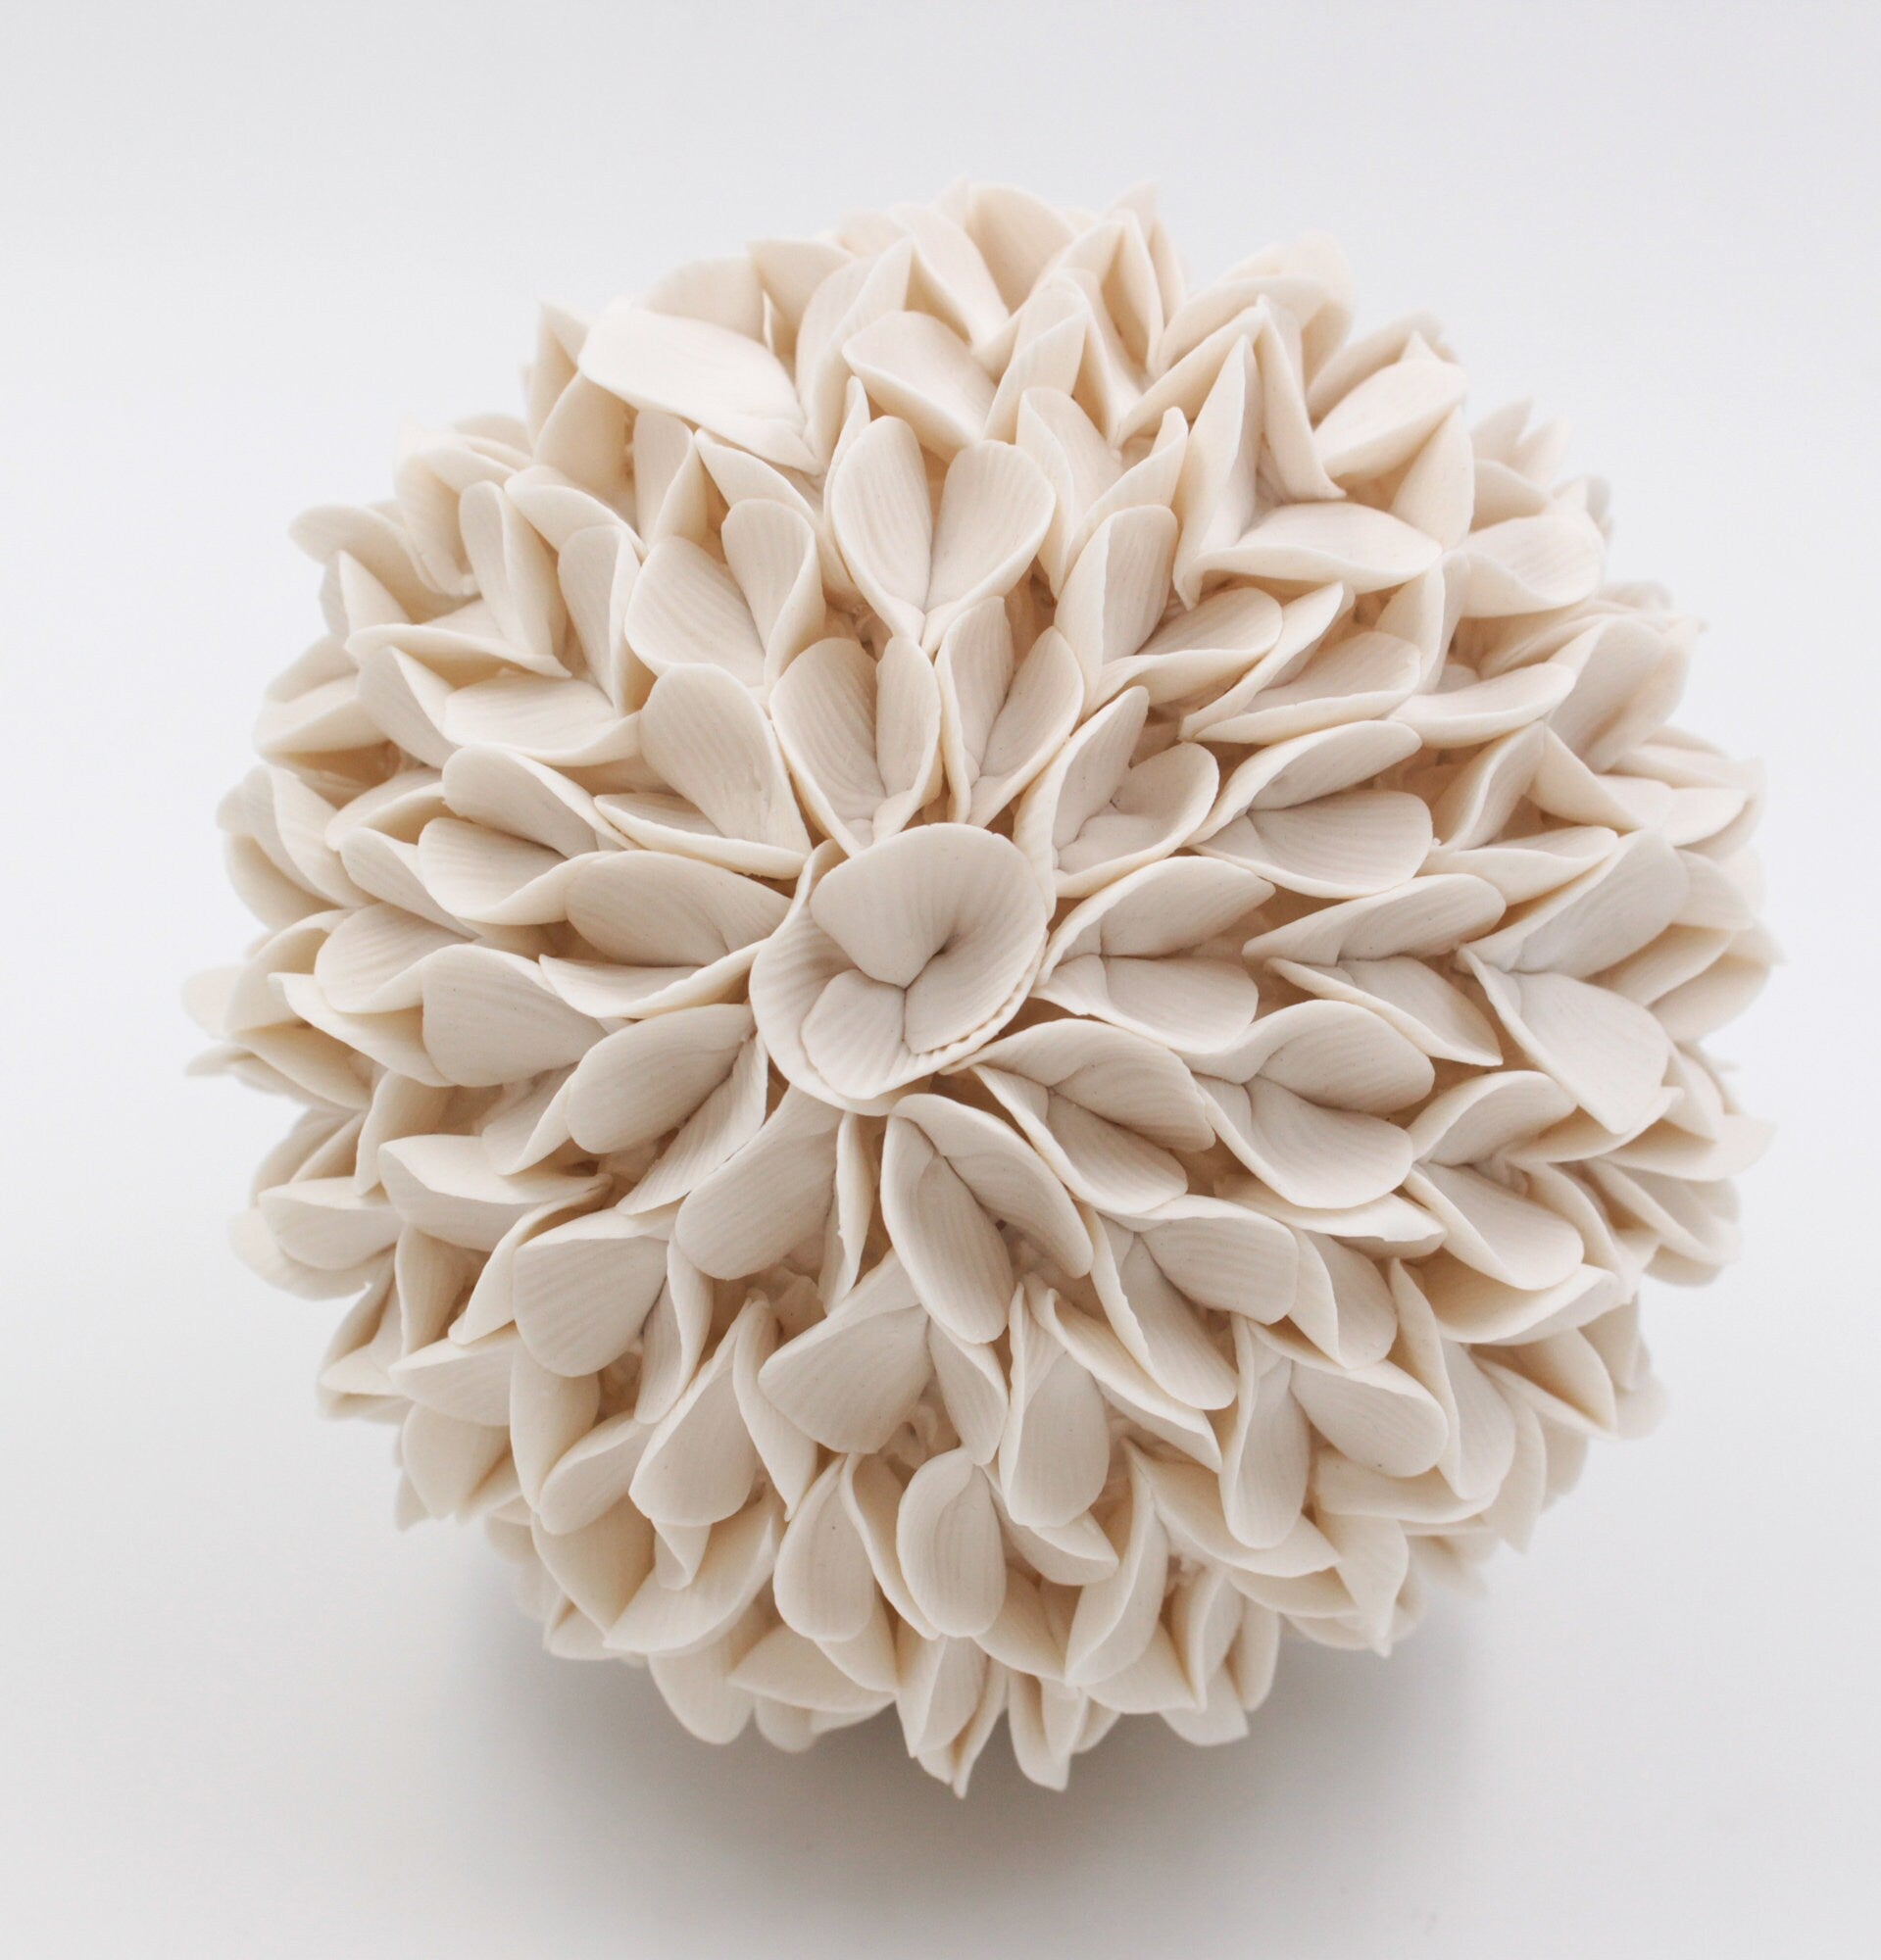 Coral Sphere Sculpture